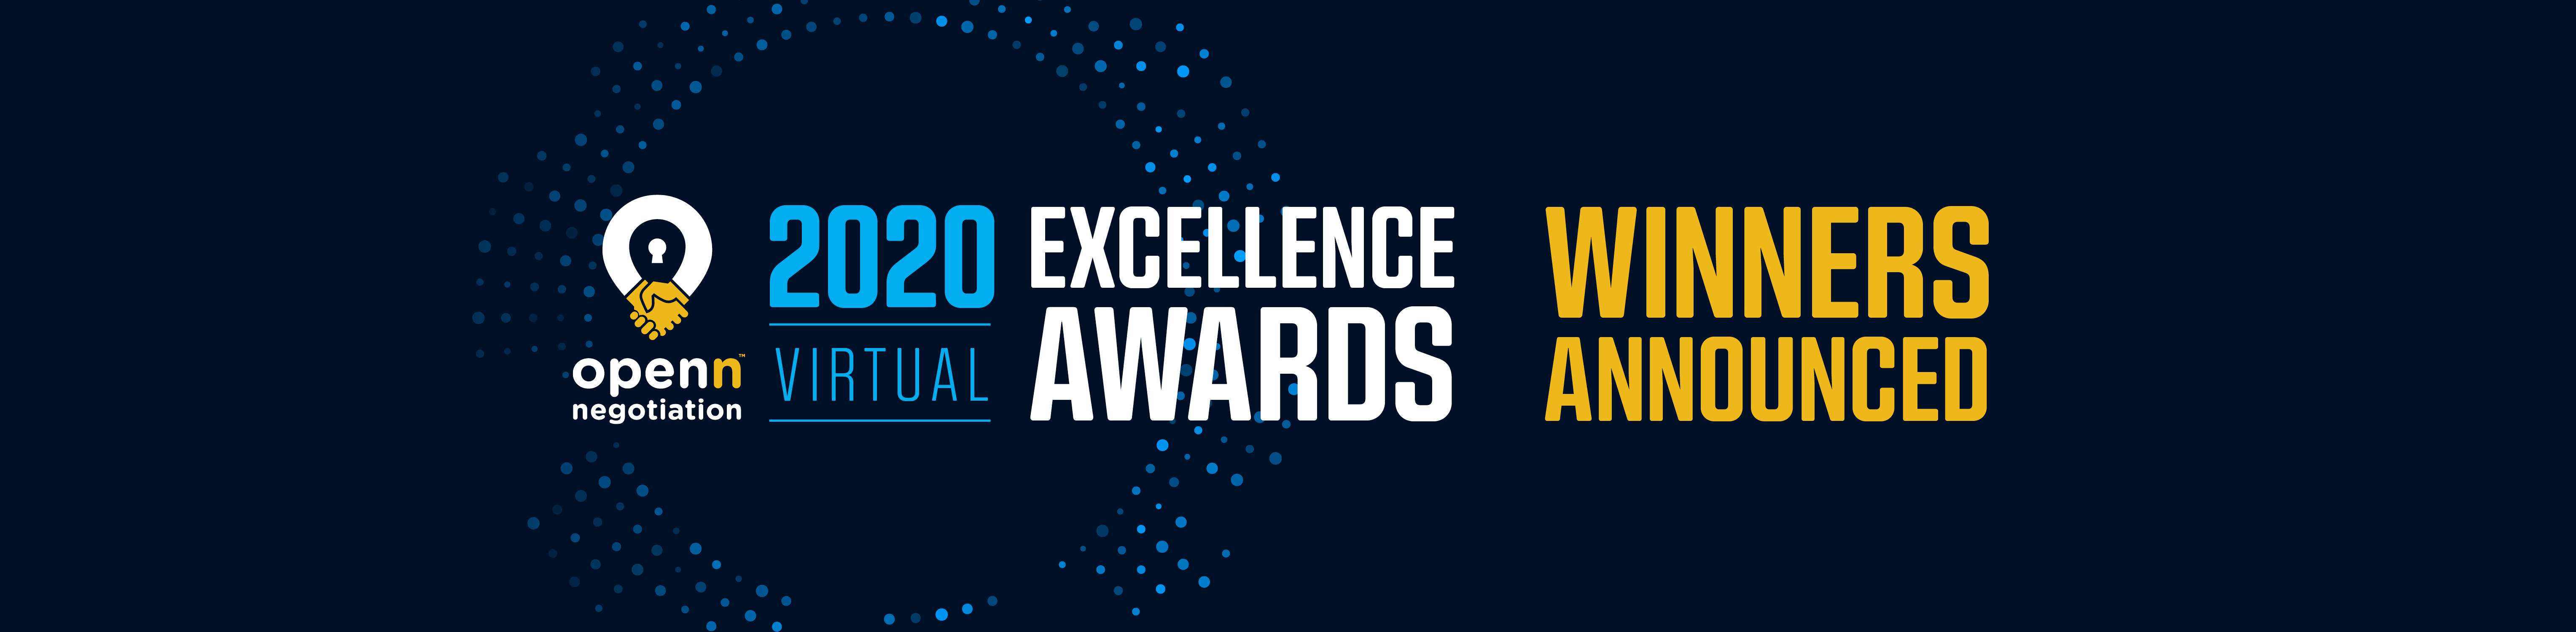 Openn_Virtual Excellence Awards_LP banner_Winners_6110x1500px_1